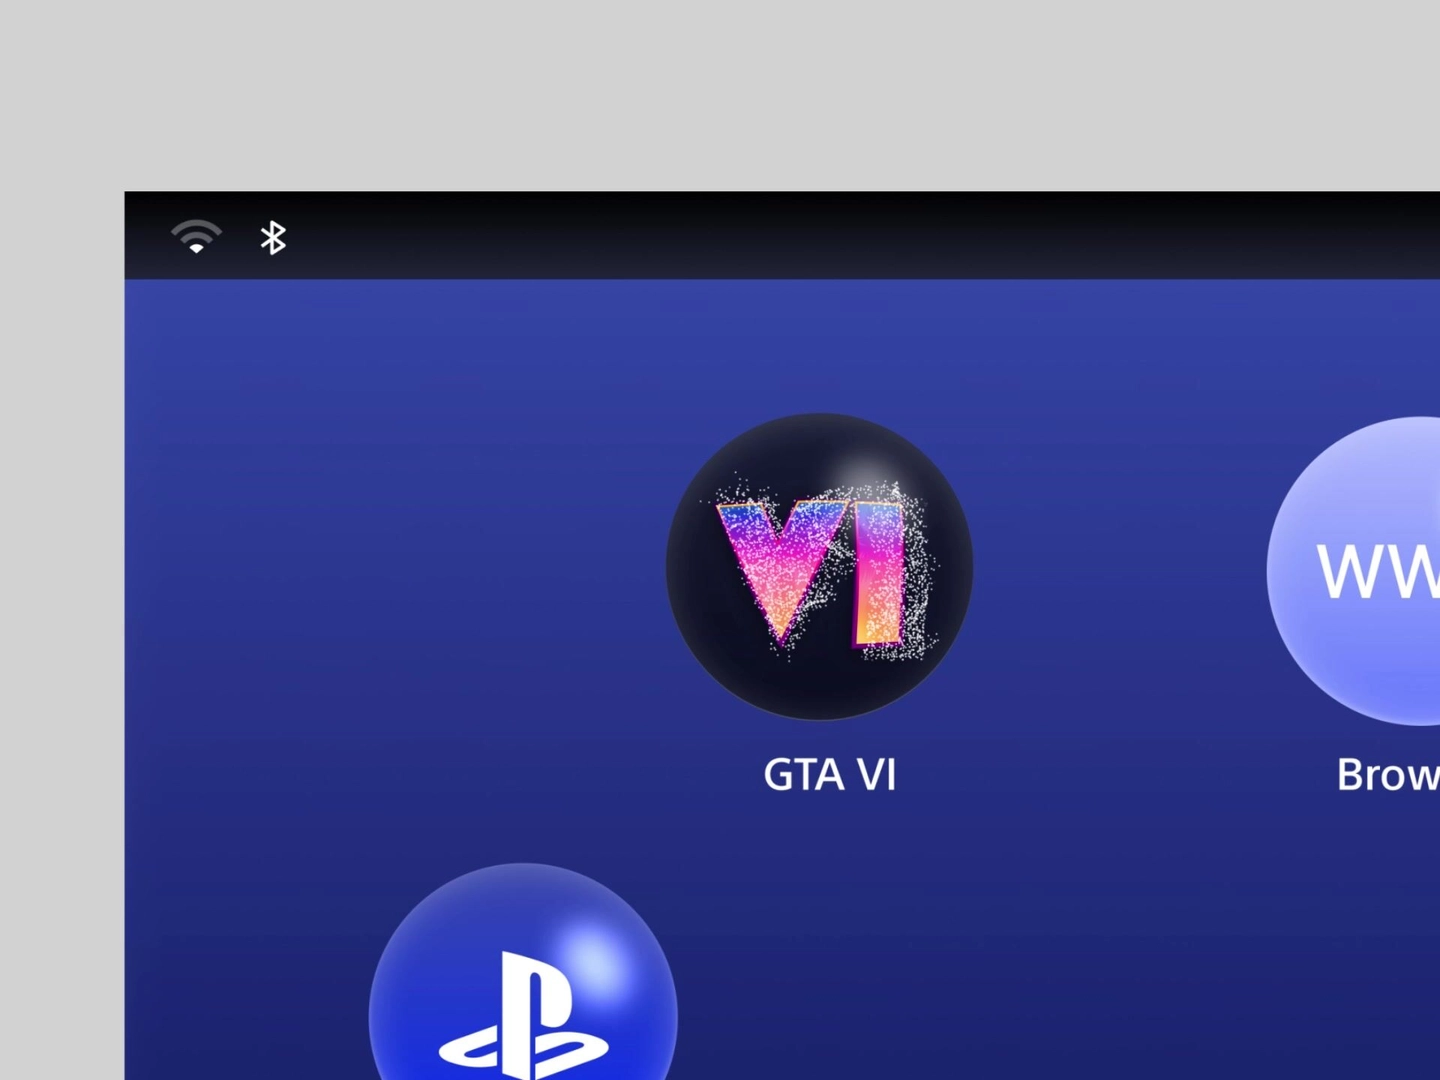 Psvita interface with GTA VI 